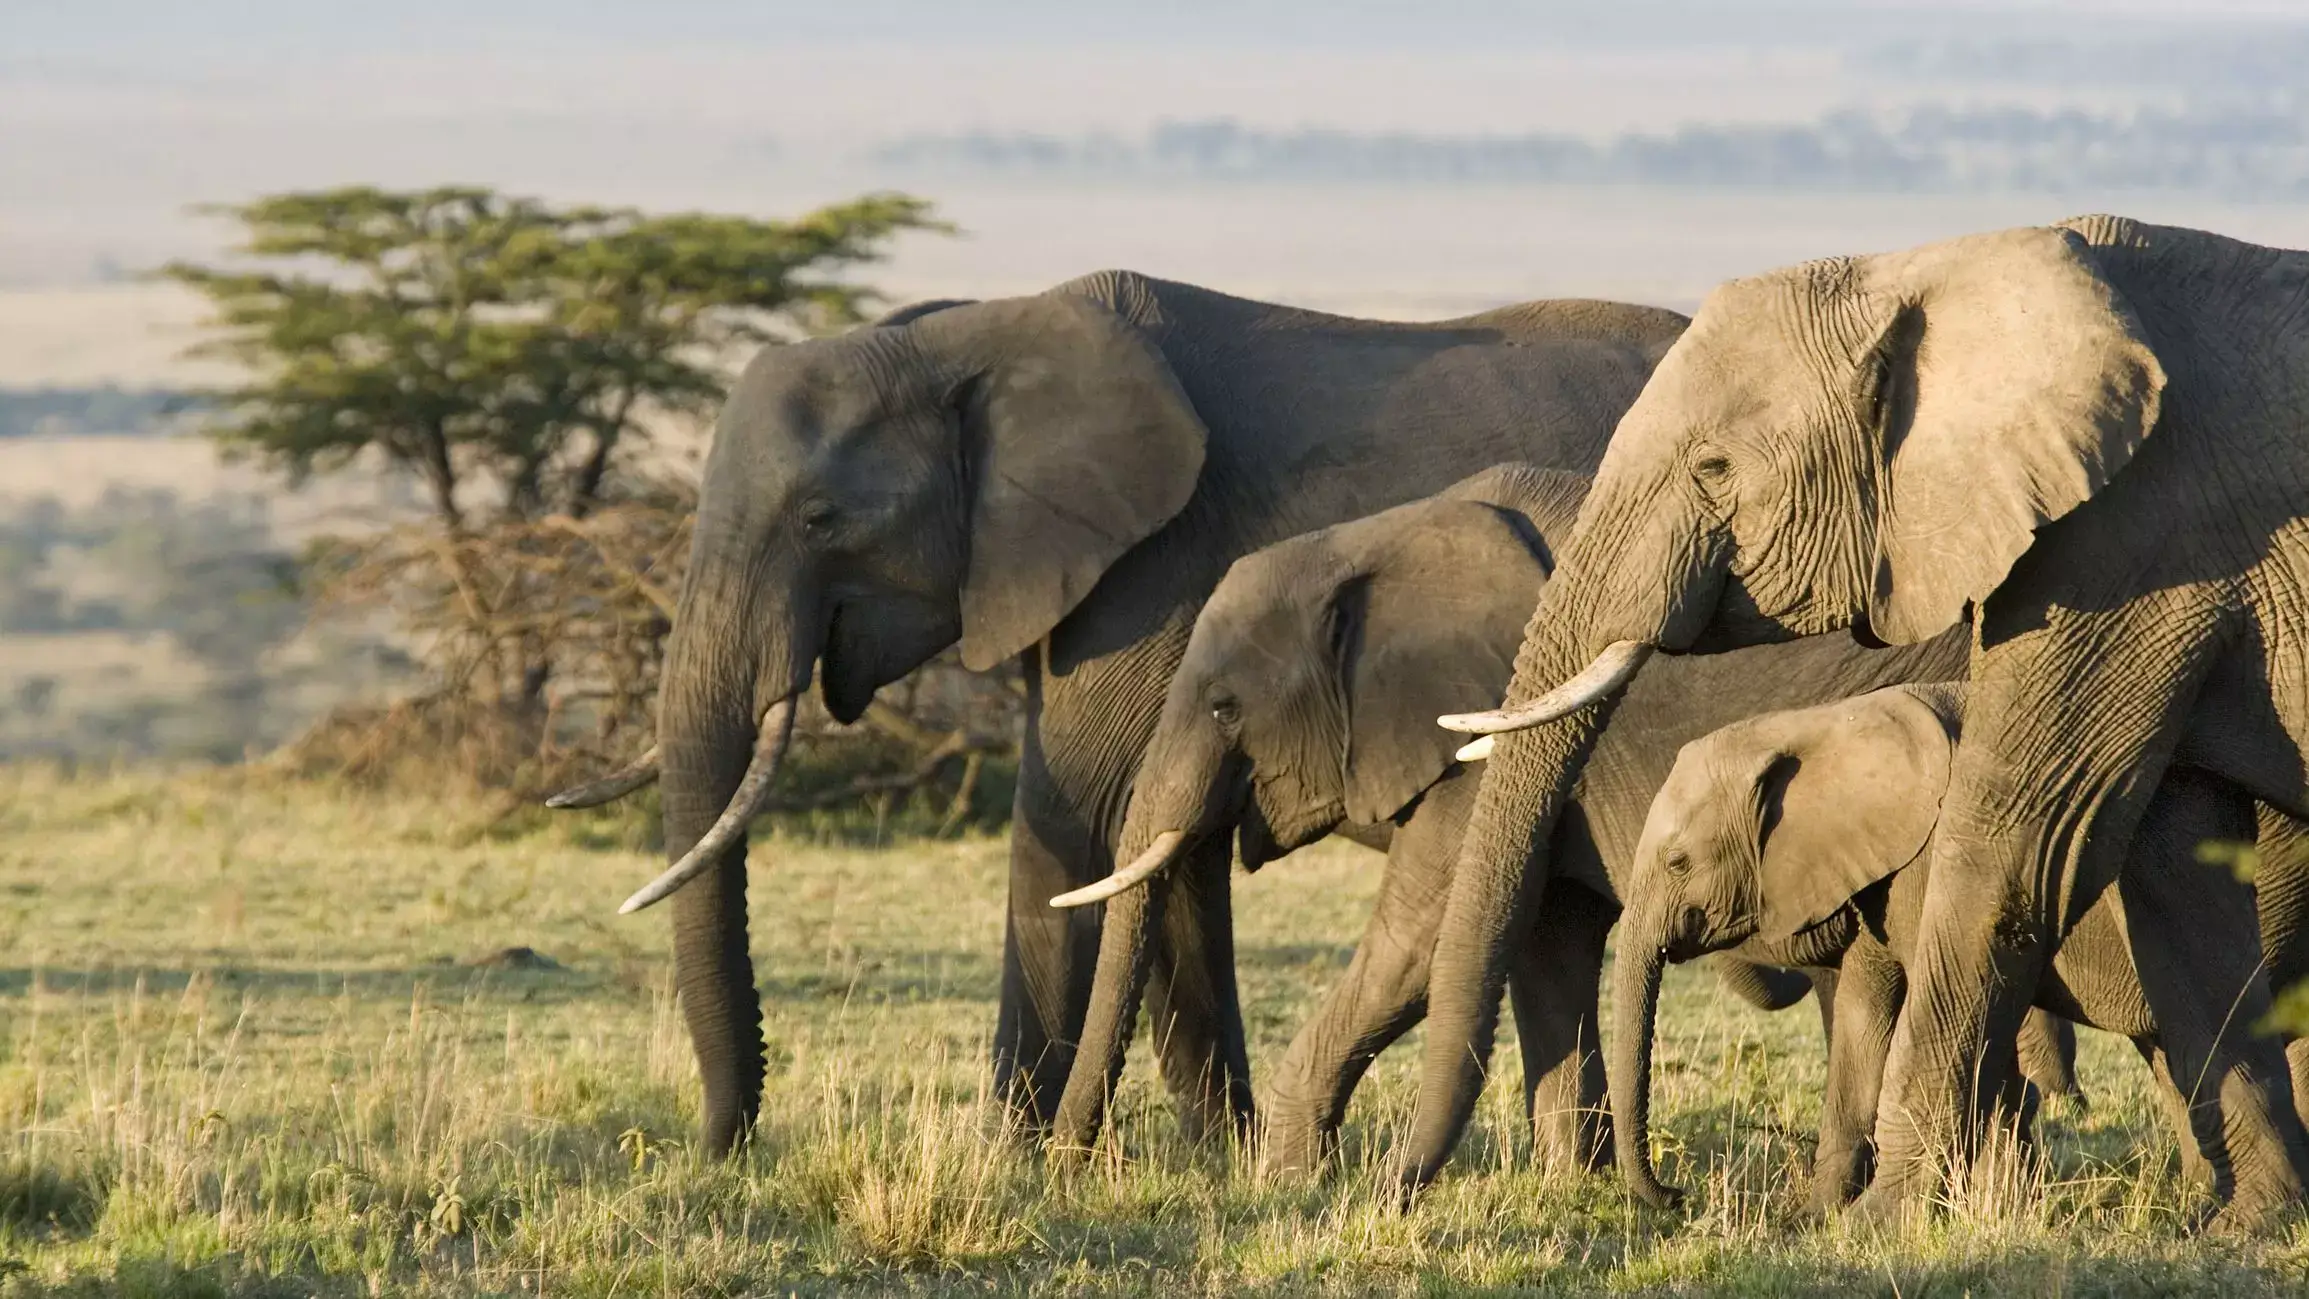 a herd of elephant along with 2 baby elephants and 2 big elephants